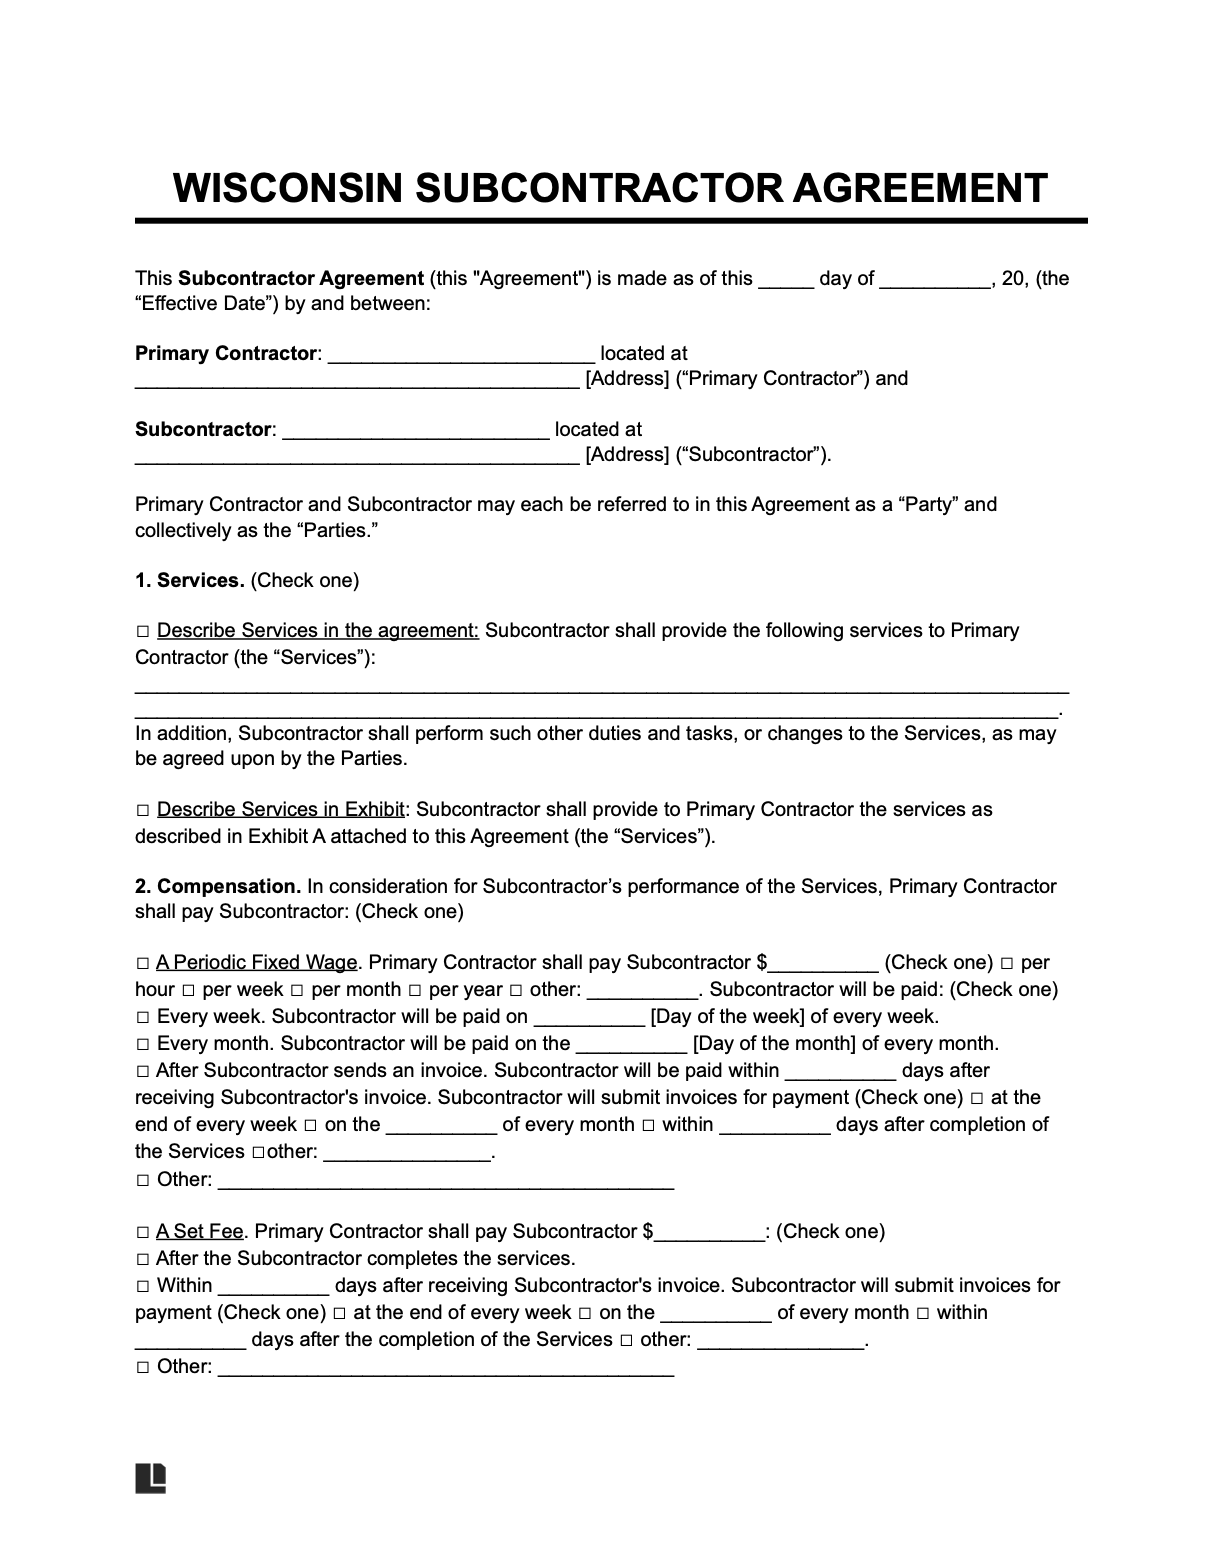 wisconsin subcontractor agreement template